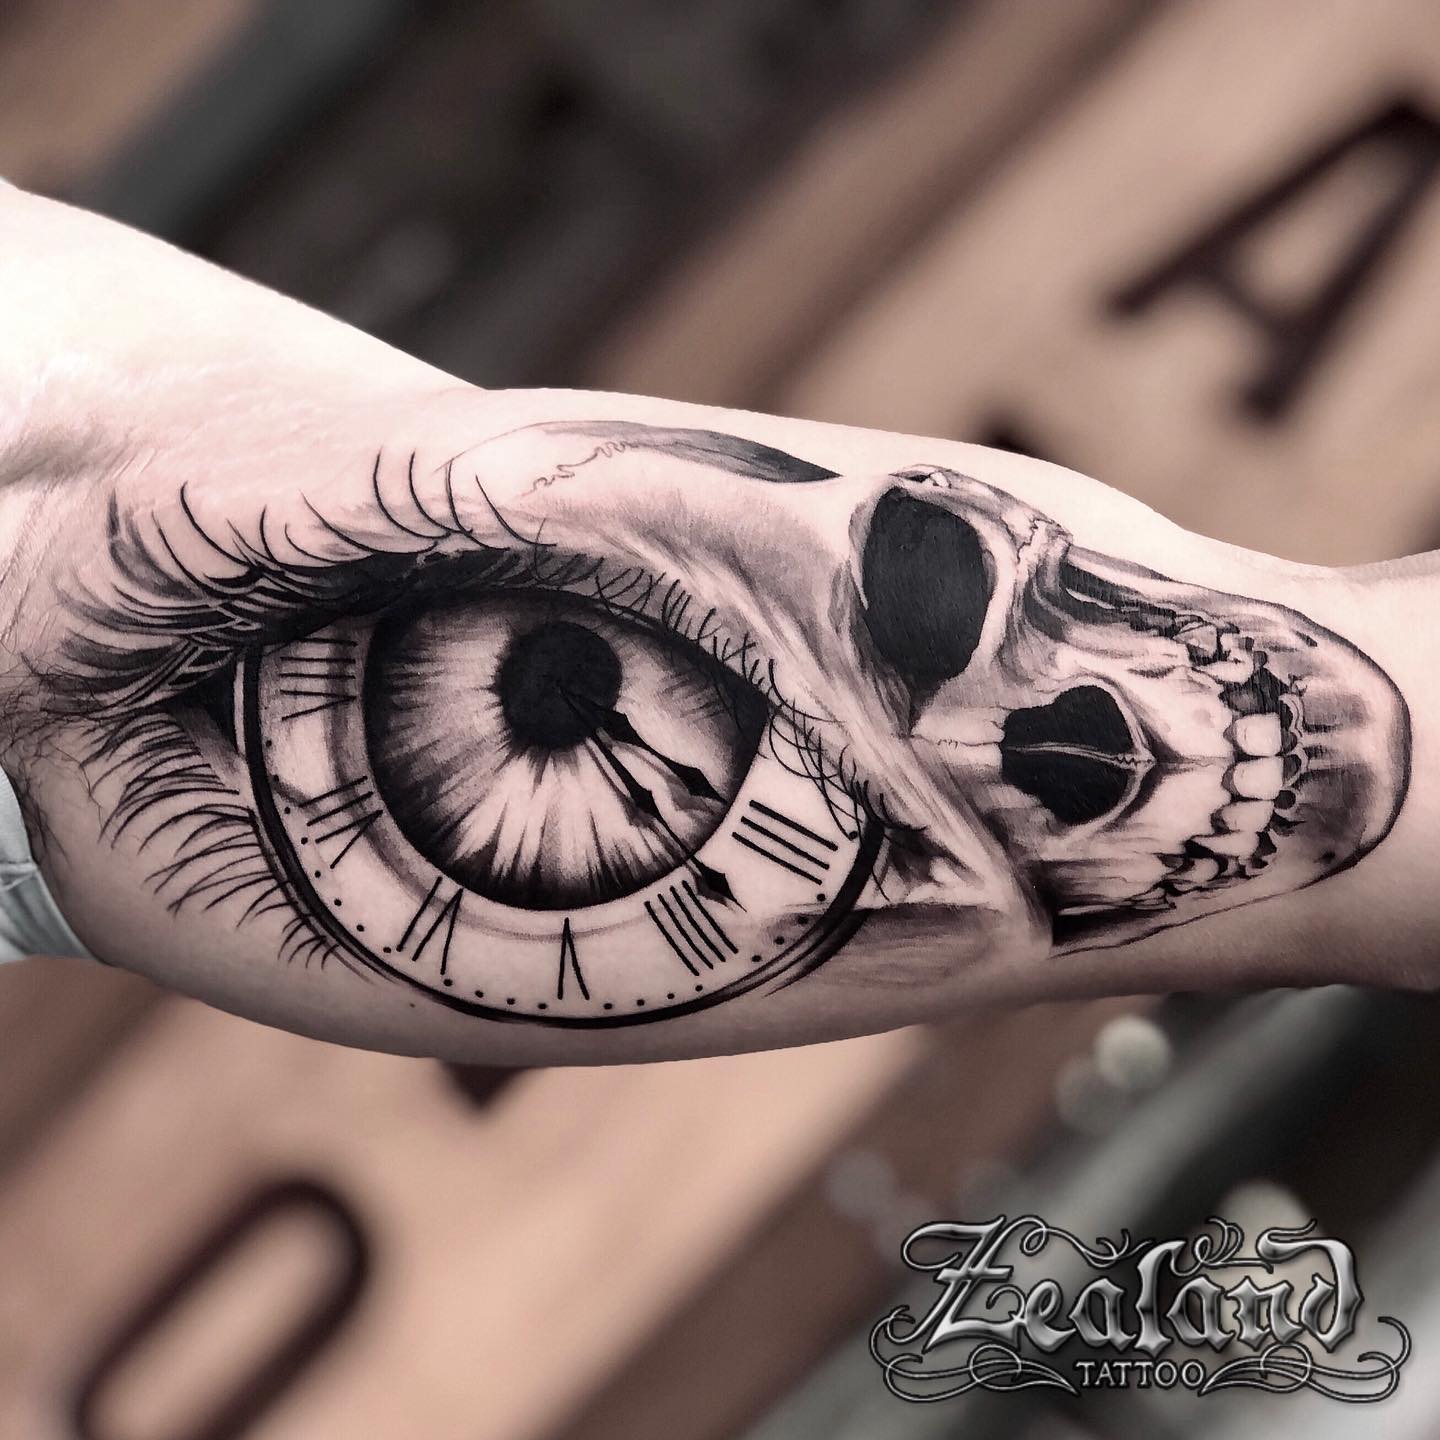 Skull with Eyes tattoo by cmun on DeviantArt